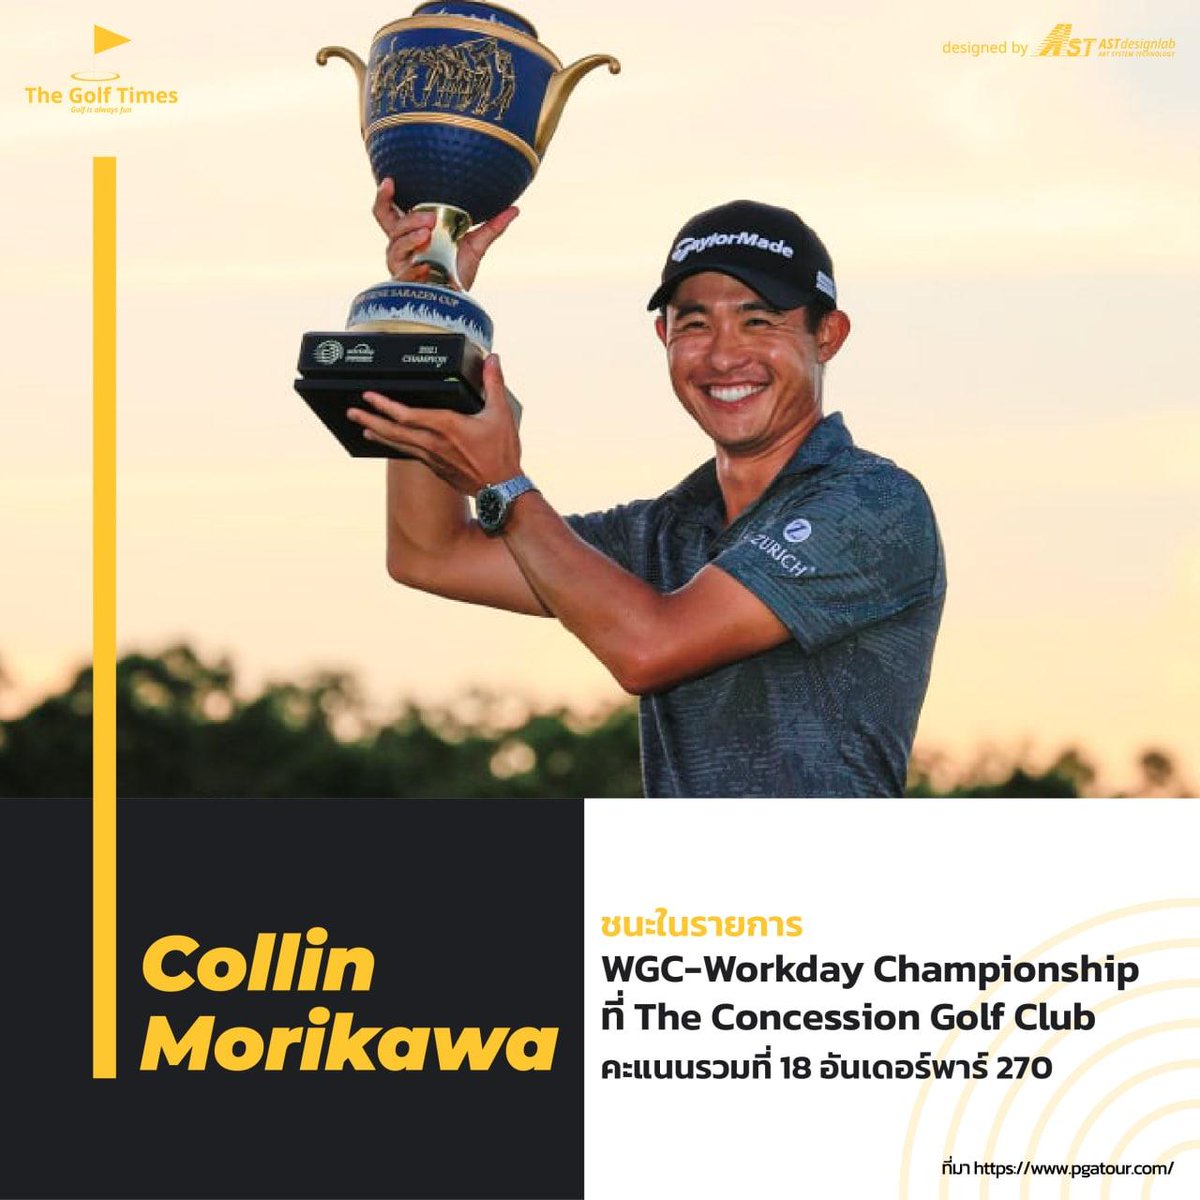 Collin Morikawa ชนะในรายการ WGC-Workday Championship ที่ The Concession Golf Club คะแนนรวมที่ 18 อันเดอร์พาร์ 270 @Collin_Morikawa

#WGC #WorldGolfChampionship #PGA #PGAtour #CheersToTheChampion #golf #golfer #golflife #bangkokgolf #golfthailand #골프 #골프스윙
#TheGolfTimes